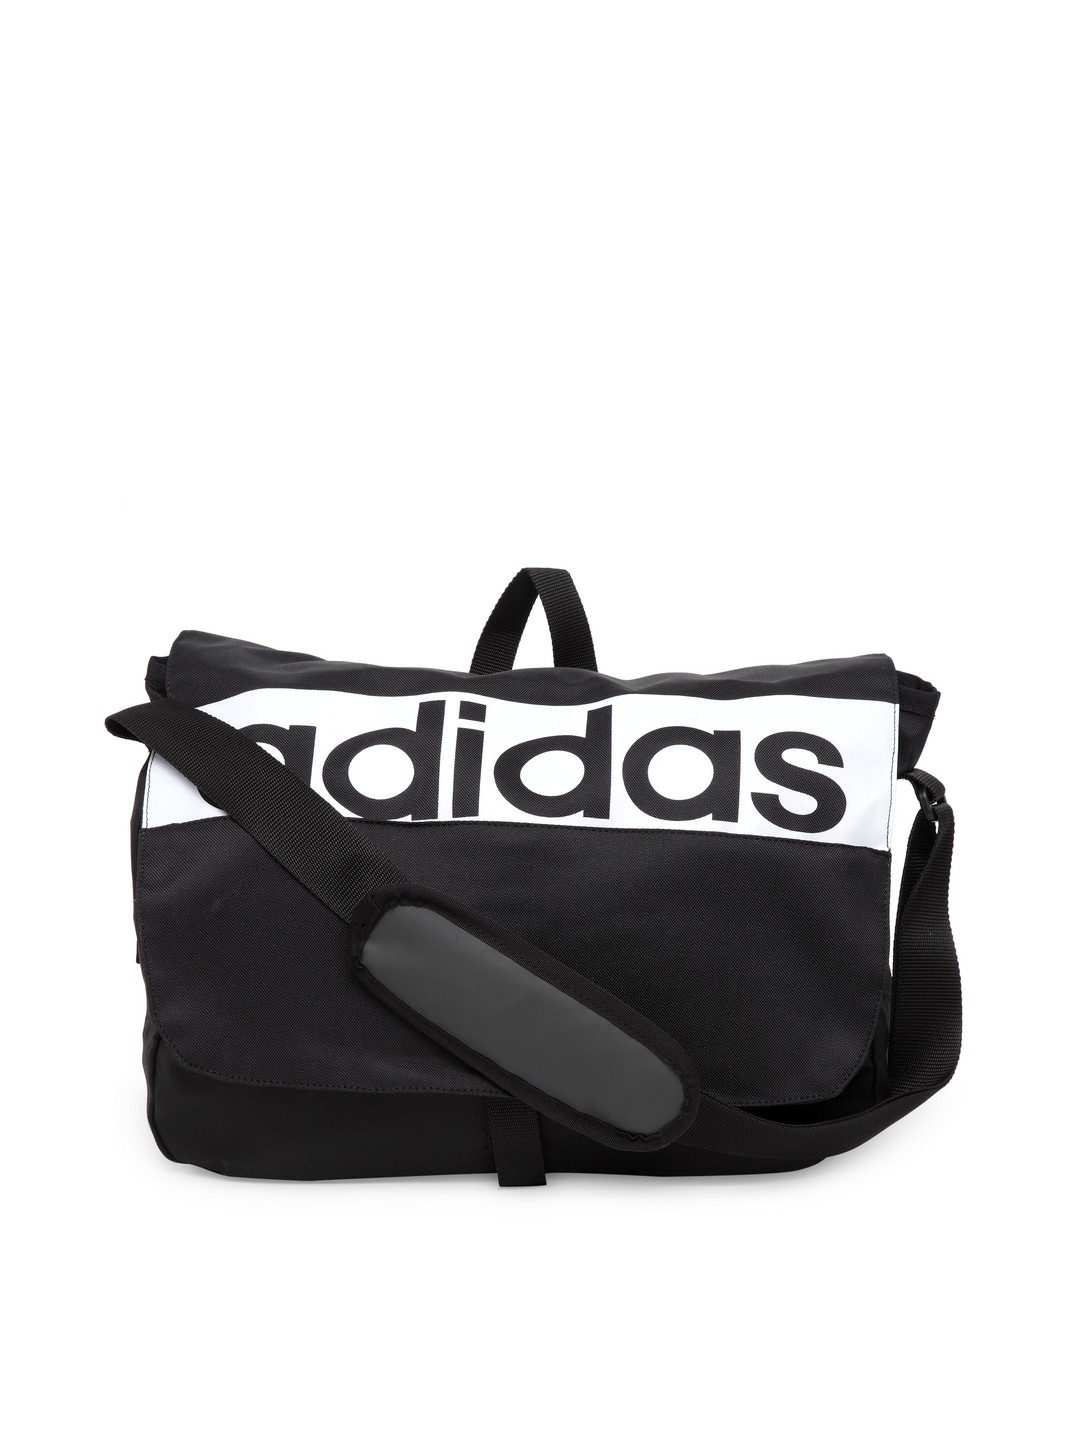 Adidas AC Sir Bag Messenger W68183 (black gold) | Bags, Black cross body bag,  Adidas bags